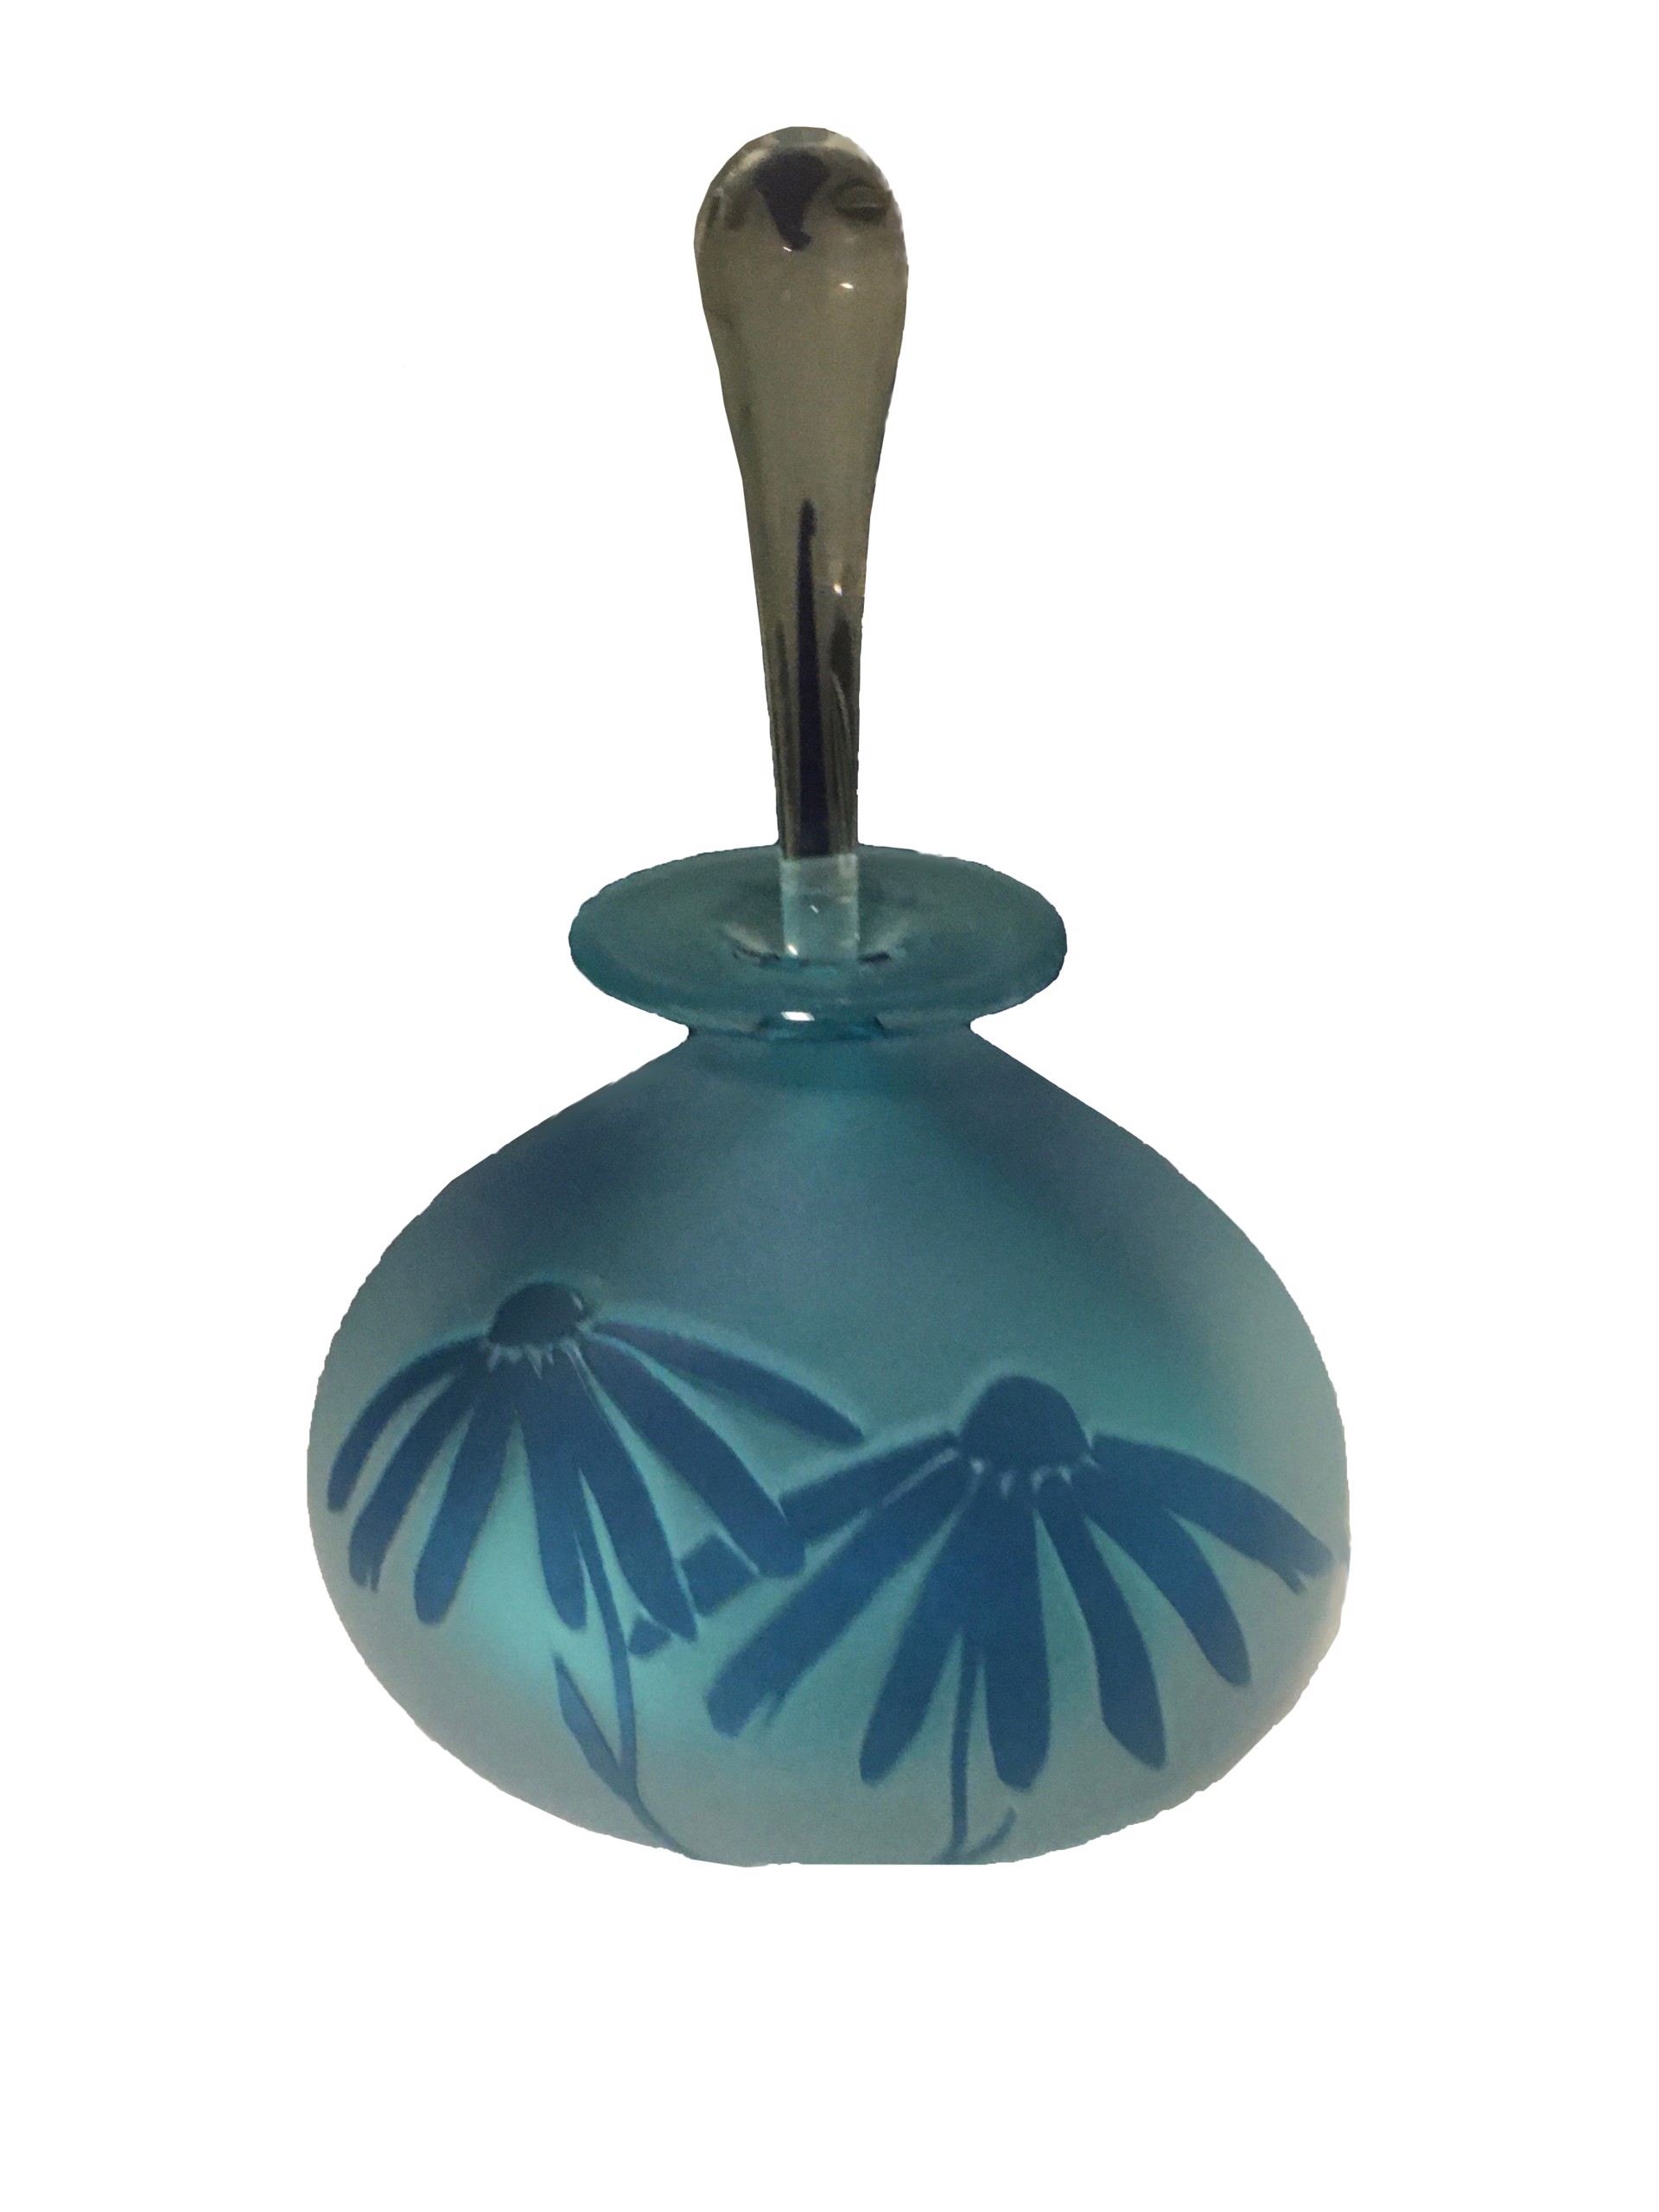 Sandblast Blue Flower Perfume Bottle by Mary Angus